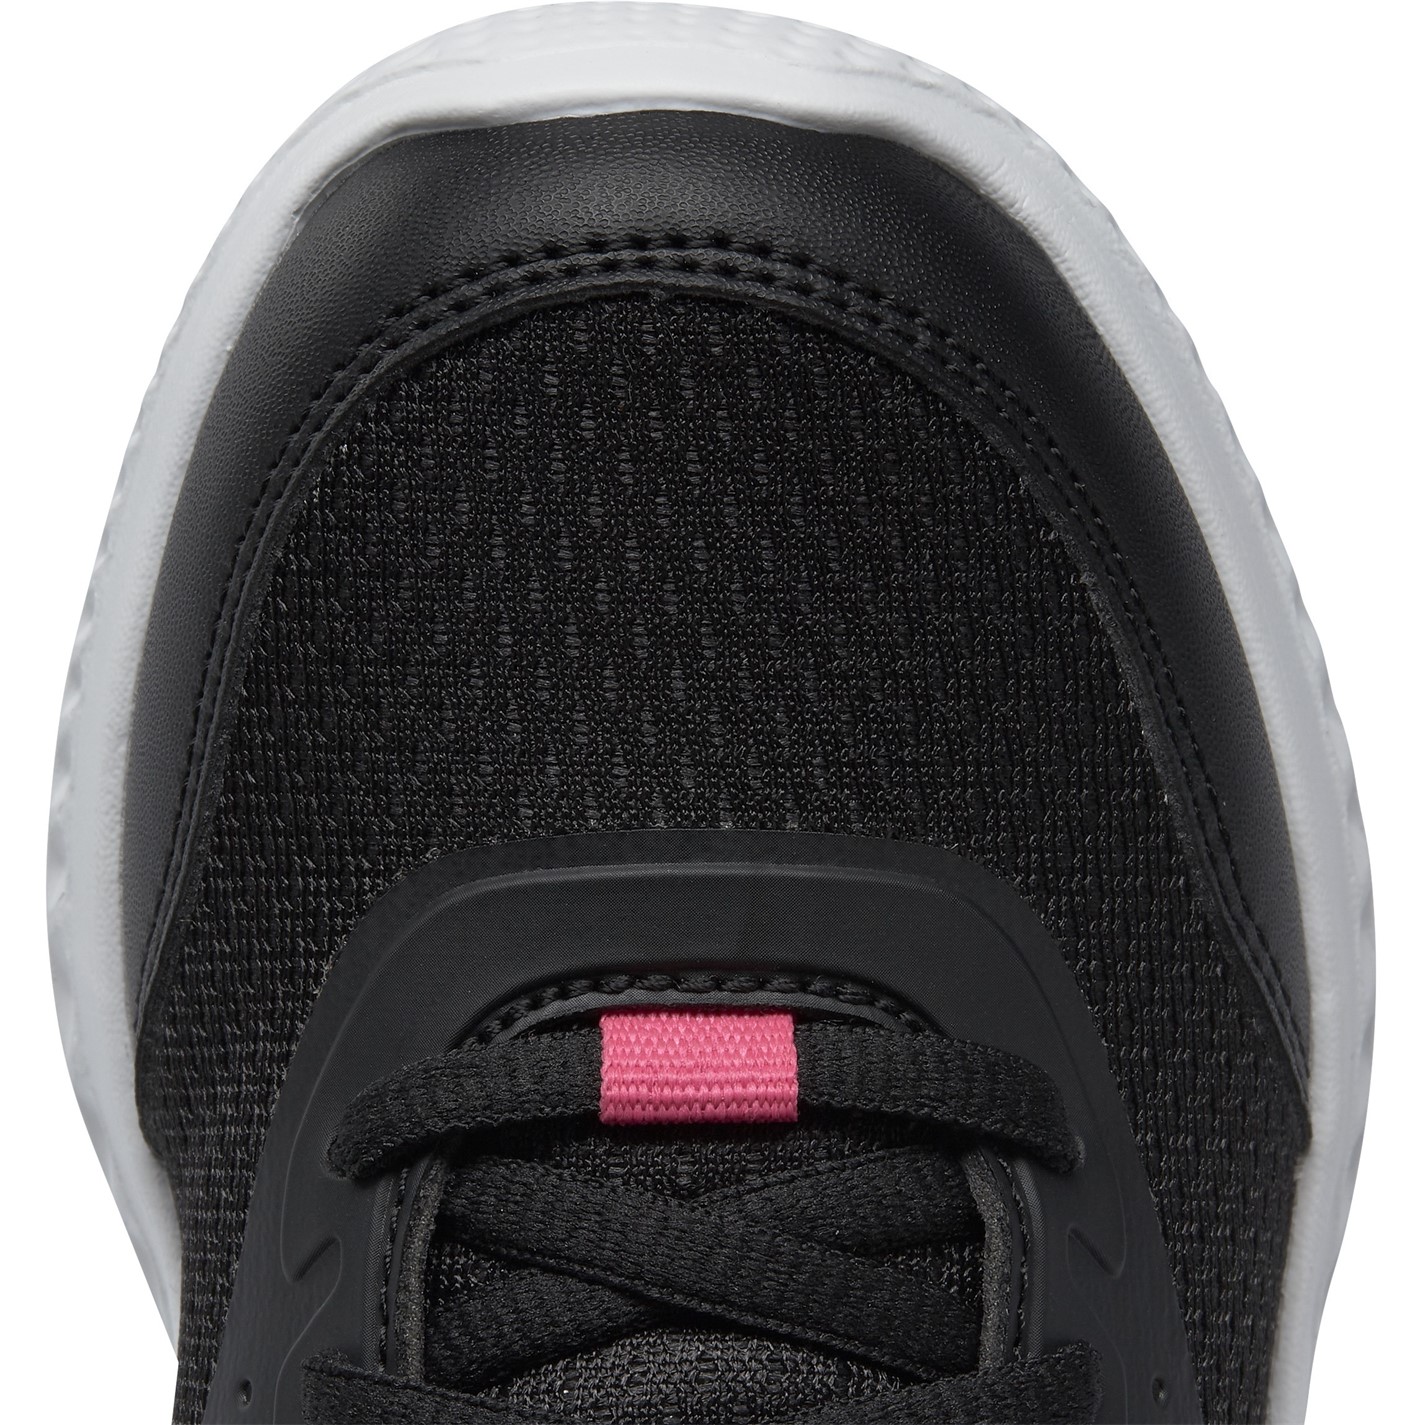 Reebok Rush Runner 4 Shoes pentru copii negru roz alb